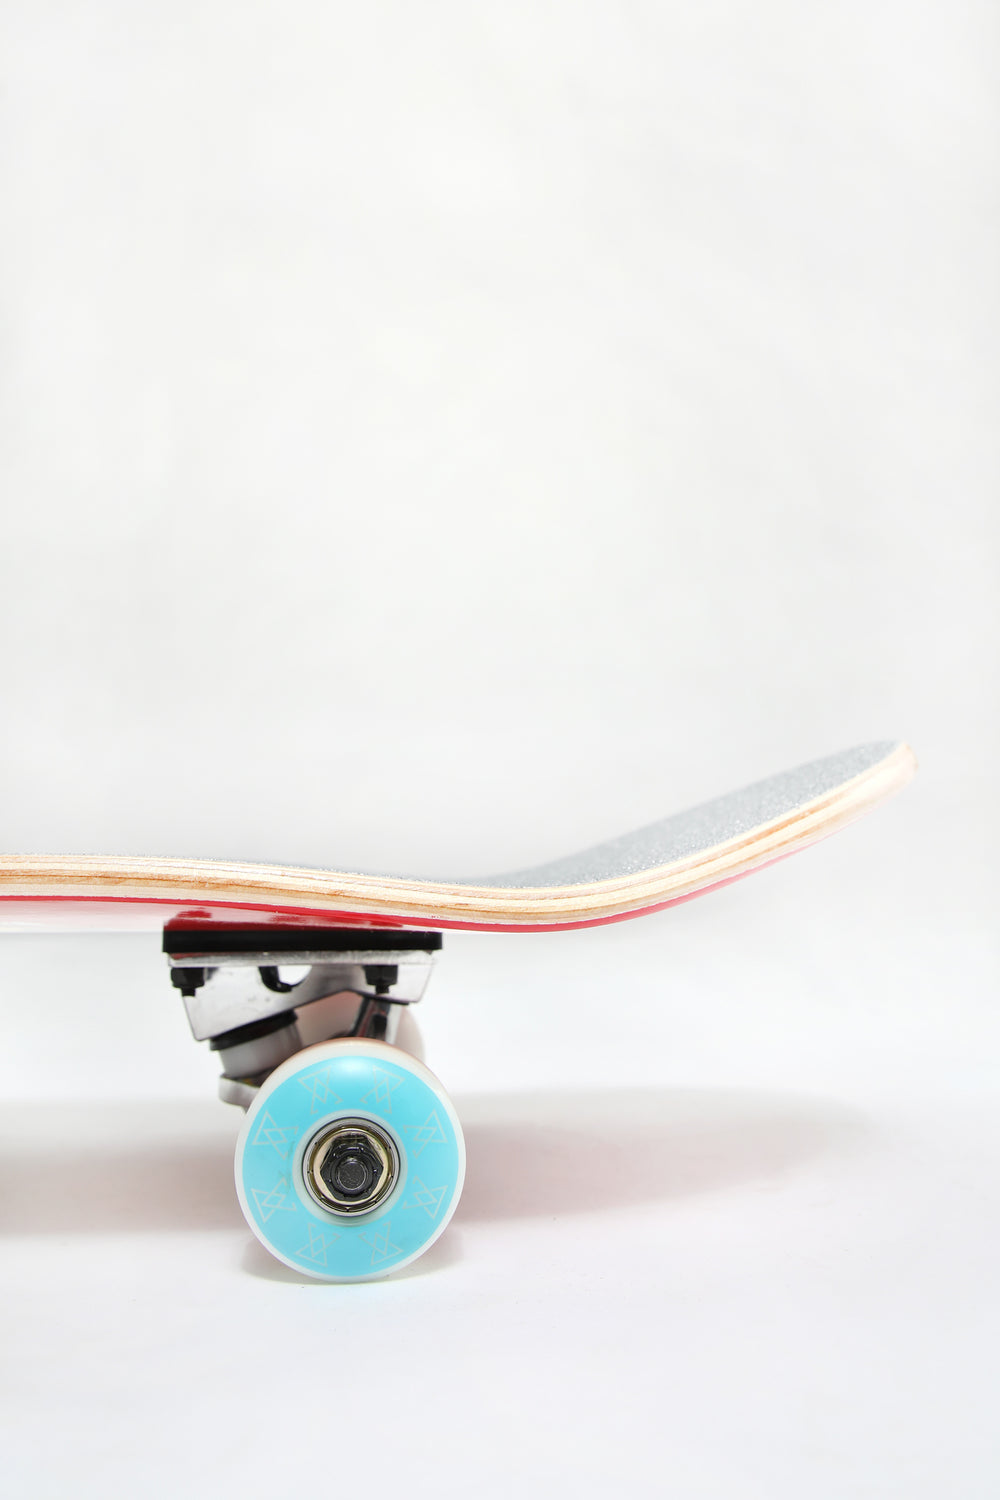 Arsenic Unlucky Charms Skateboard 7.5